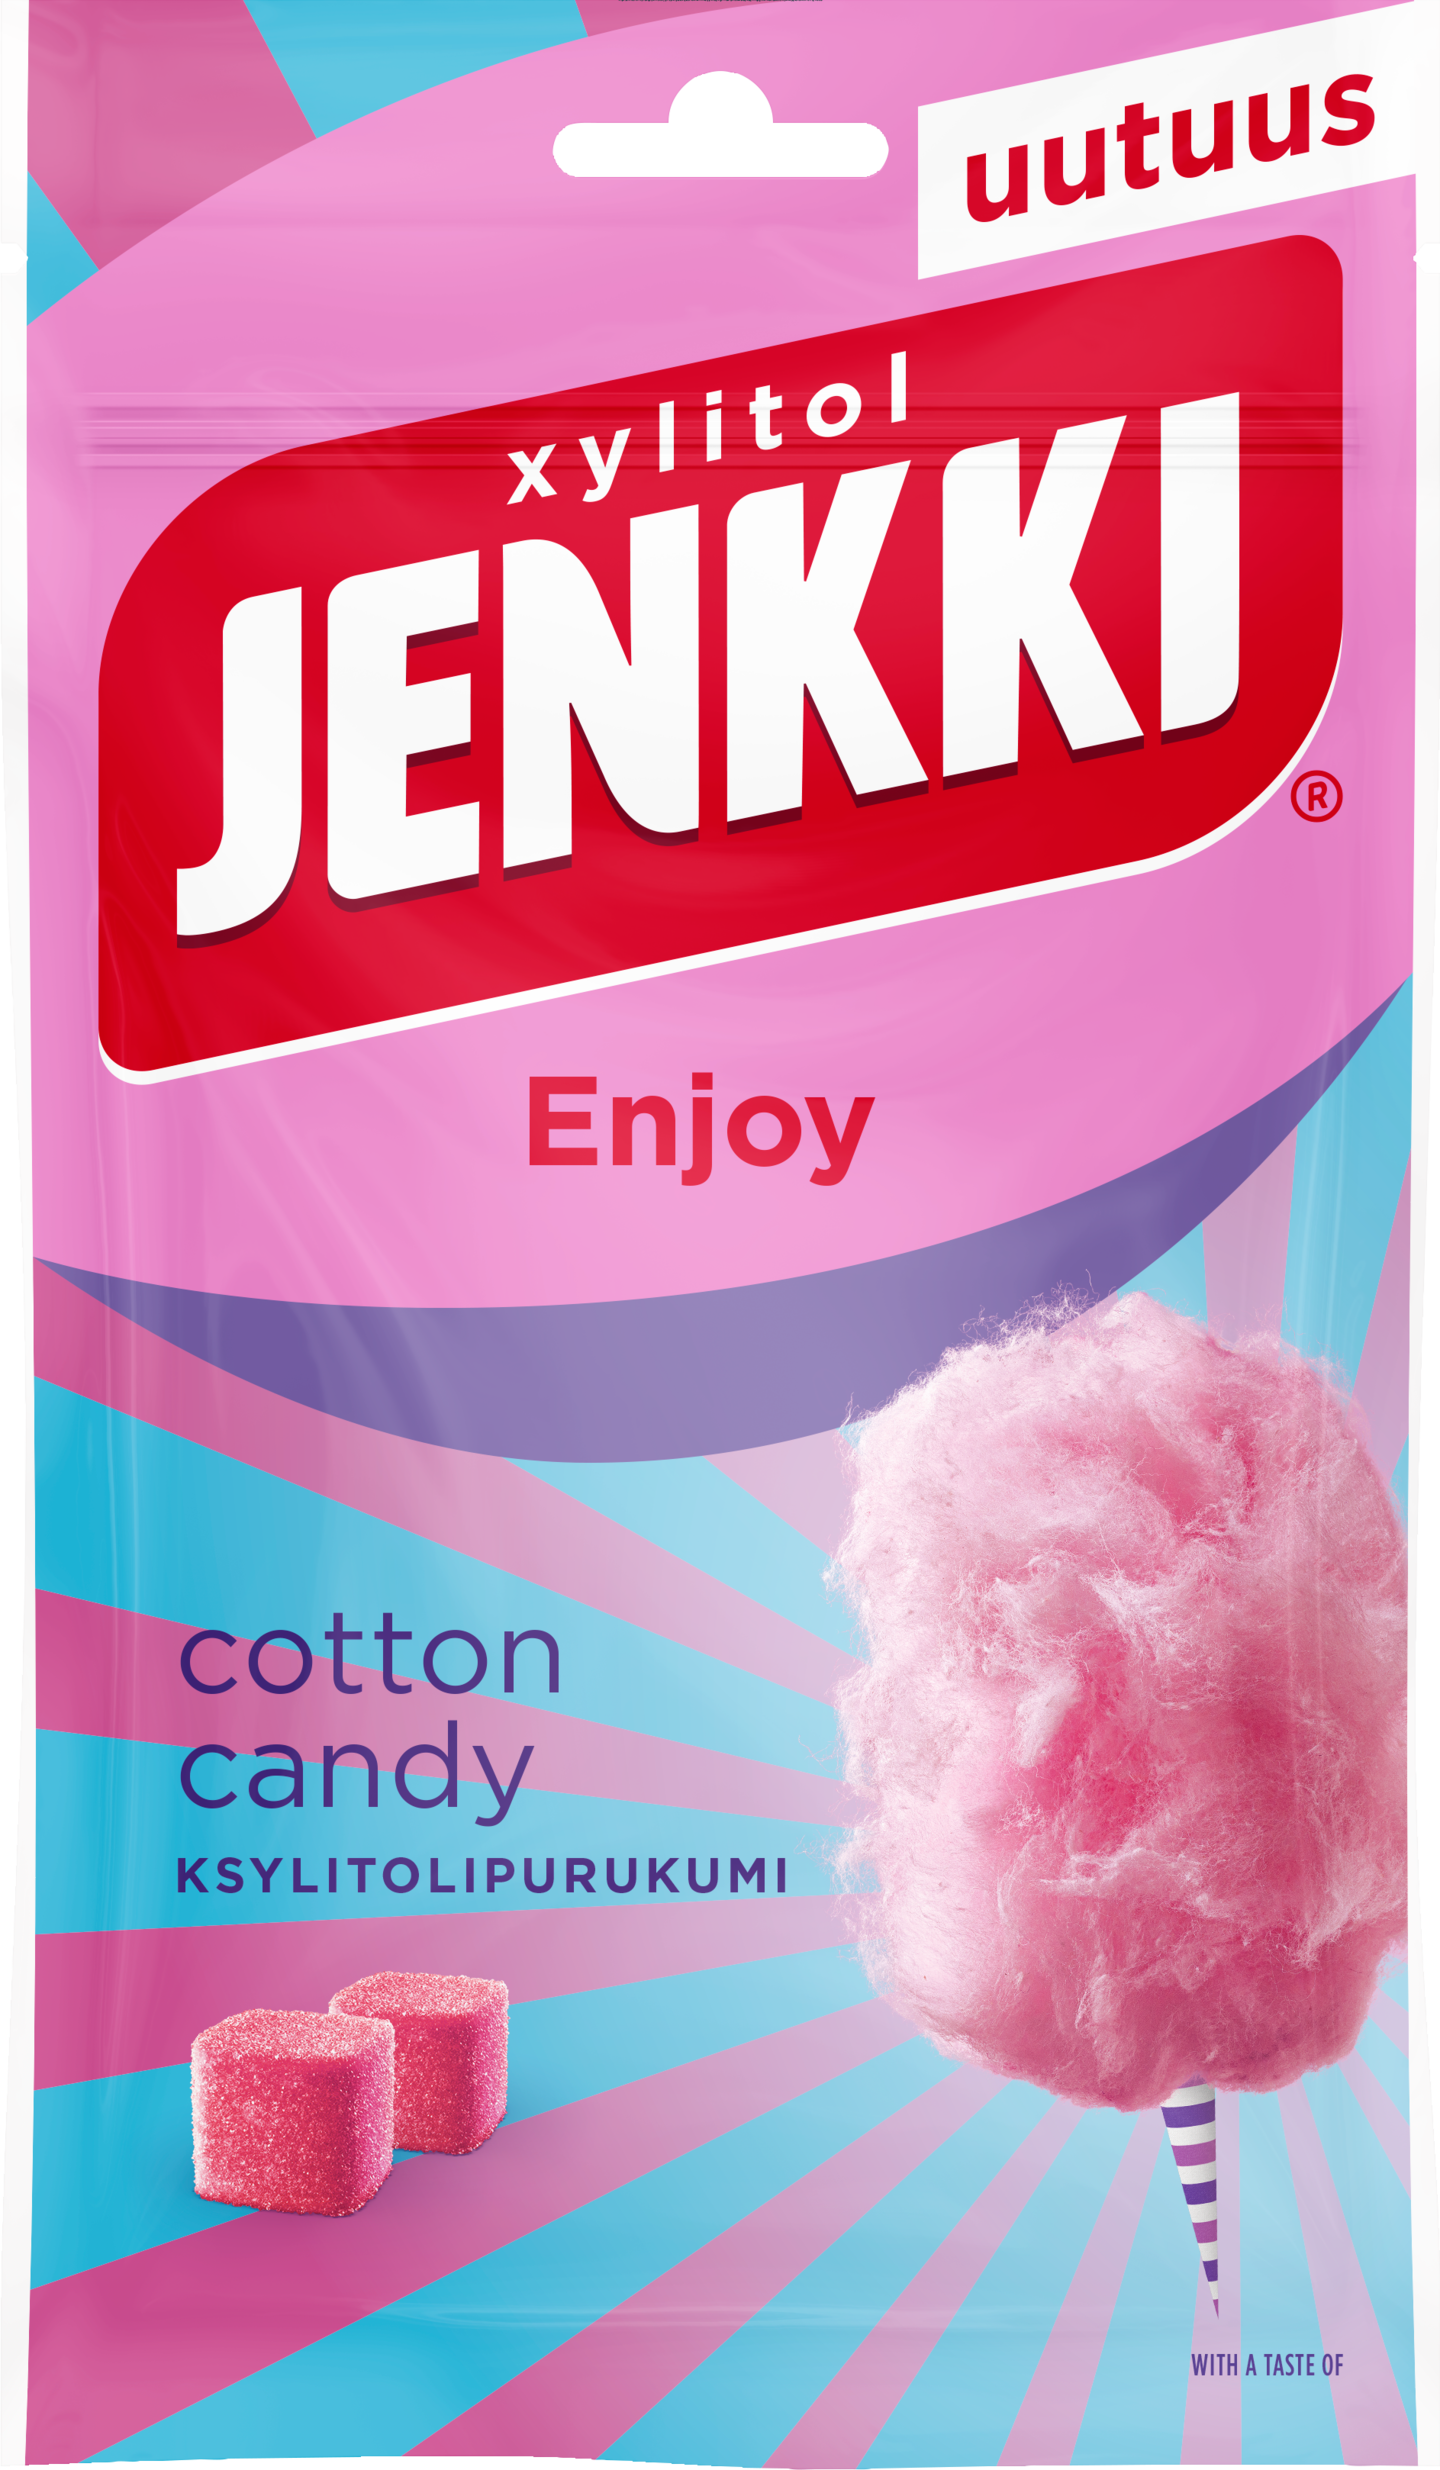 Jenkki Enjoy ksylitolipurukumi 70g Cotton Candy